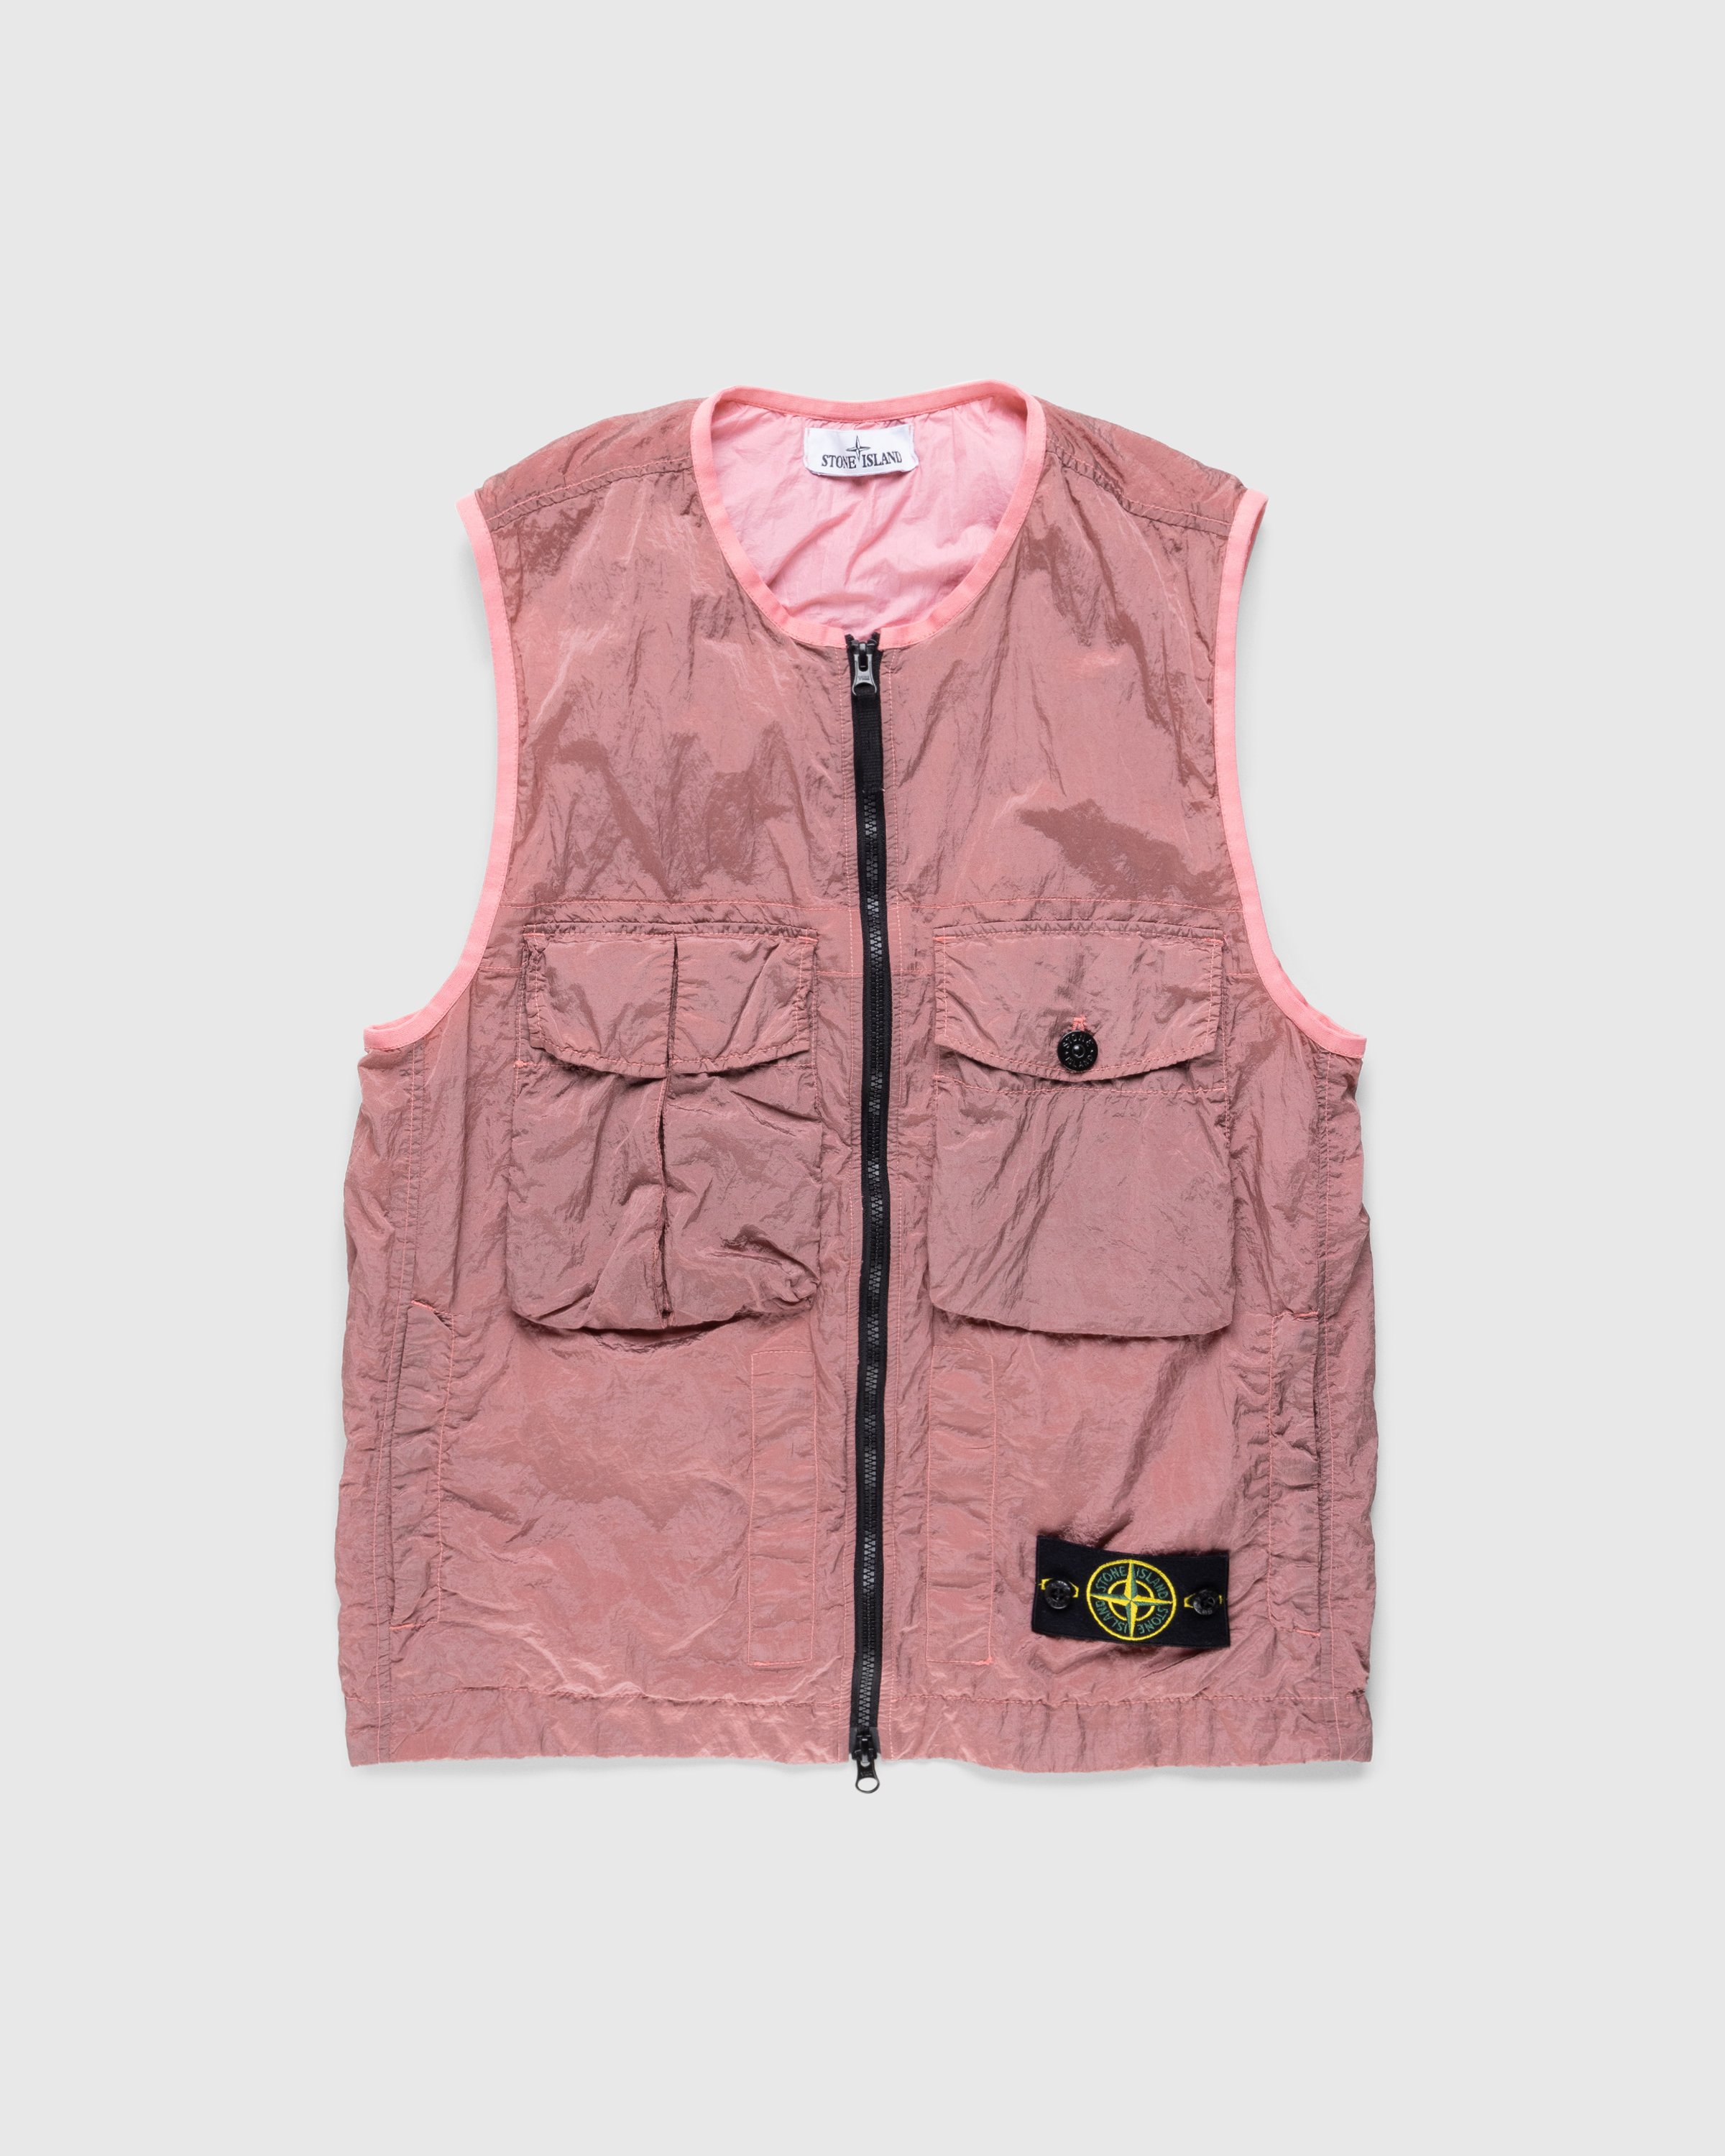 Stone Island - Giubbotto S/Maniche Pink 7815G0619 - Clothing - Pink - Image 1